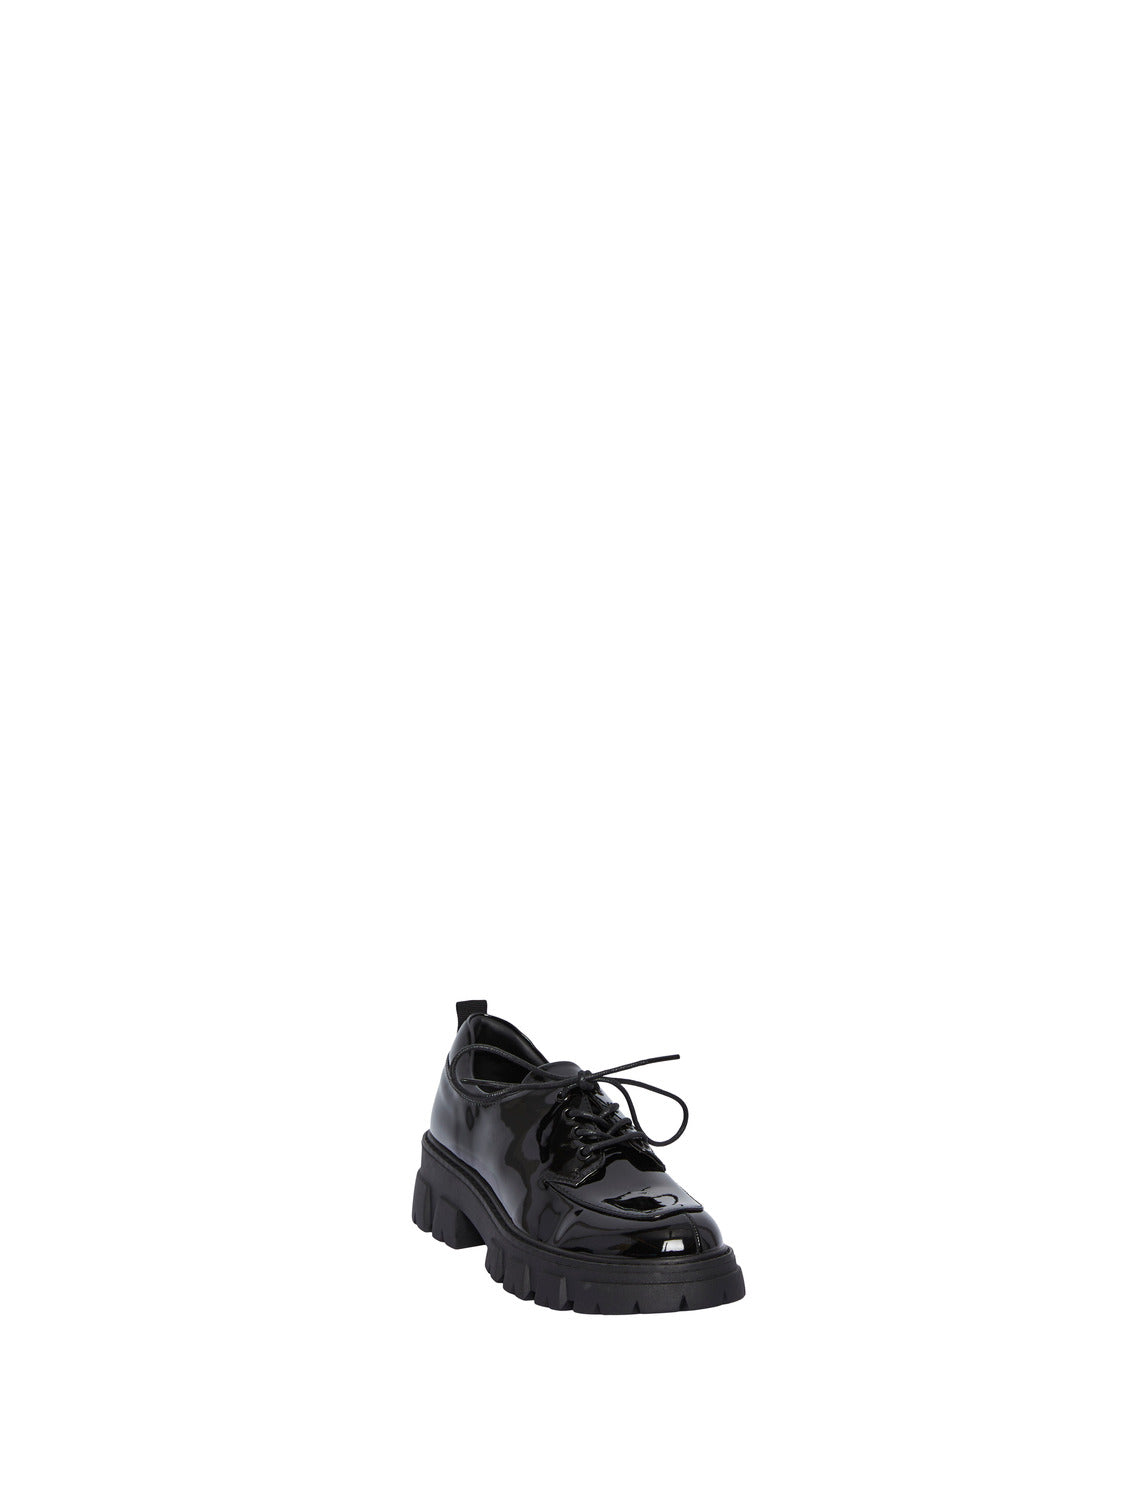 PCLOLA Shoes - Black